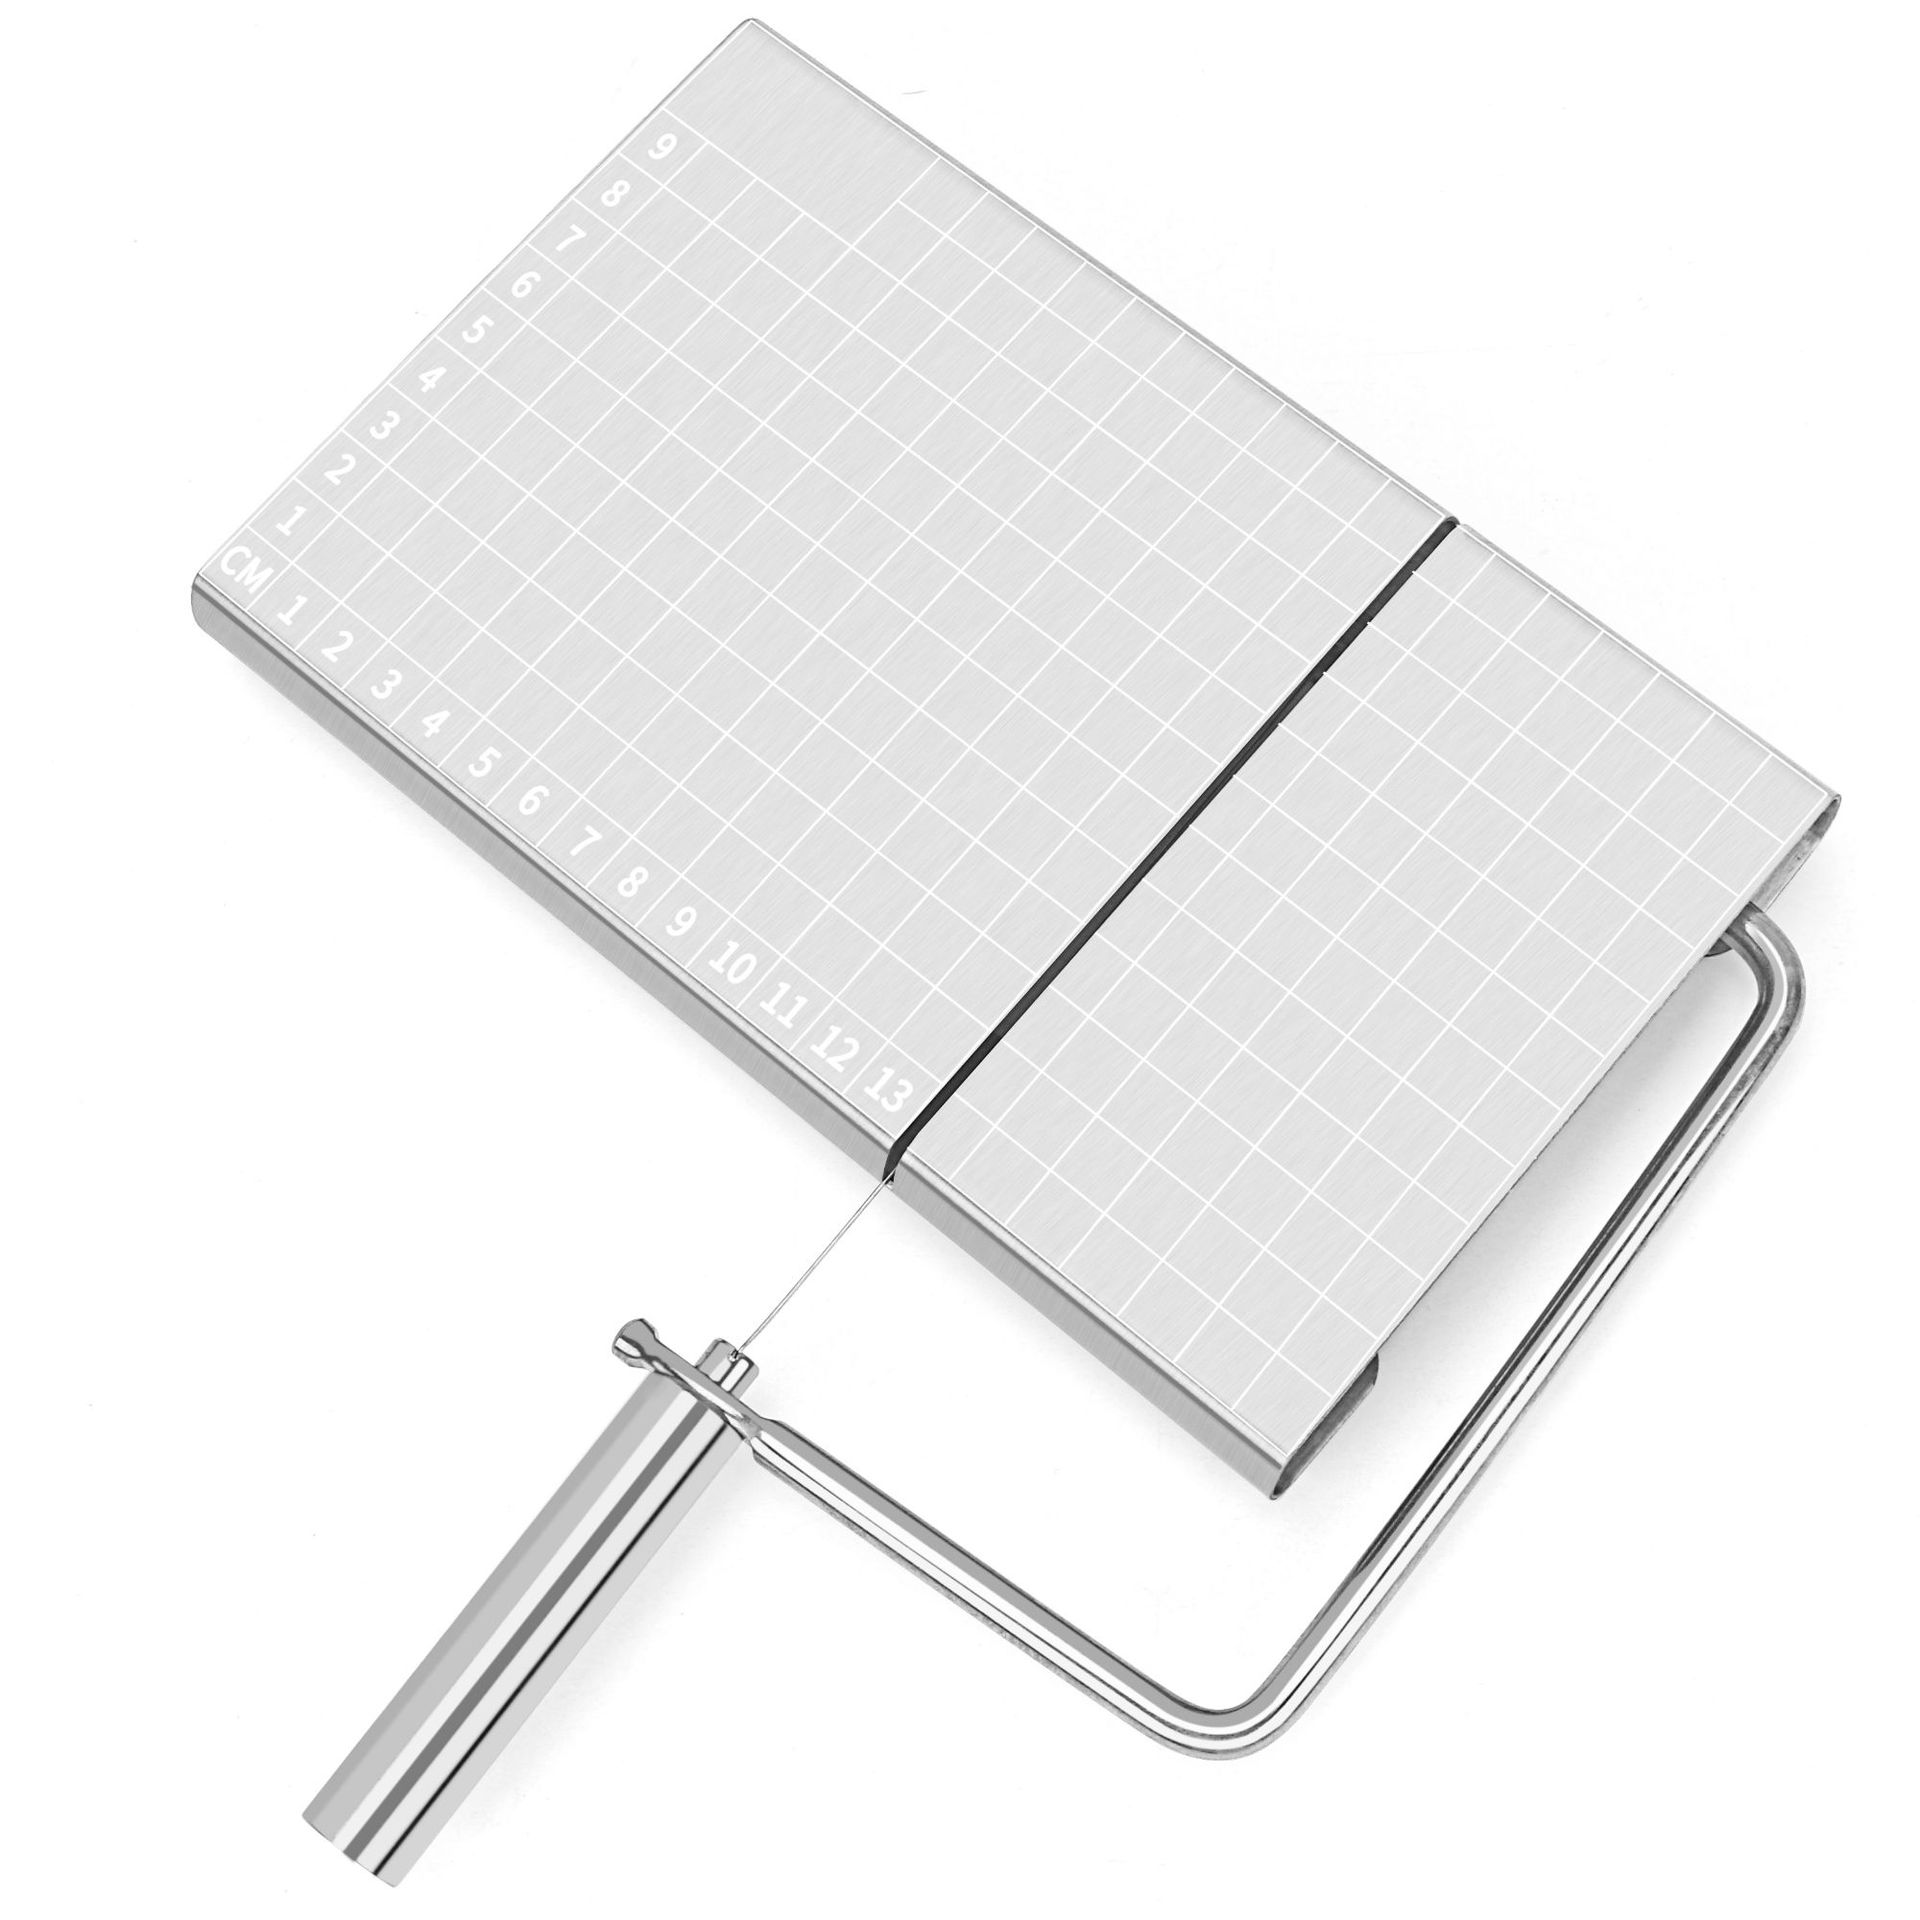 Kitchen Manual Press Slicer, Stainless Steel Wire Slicer for